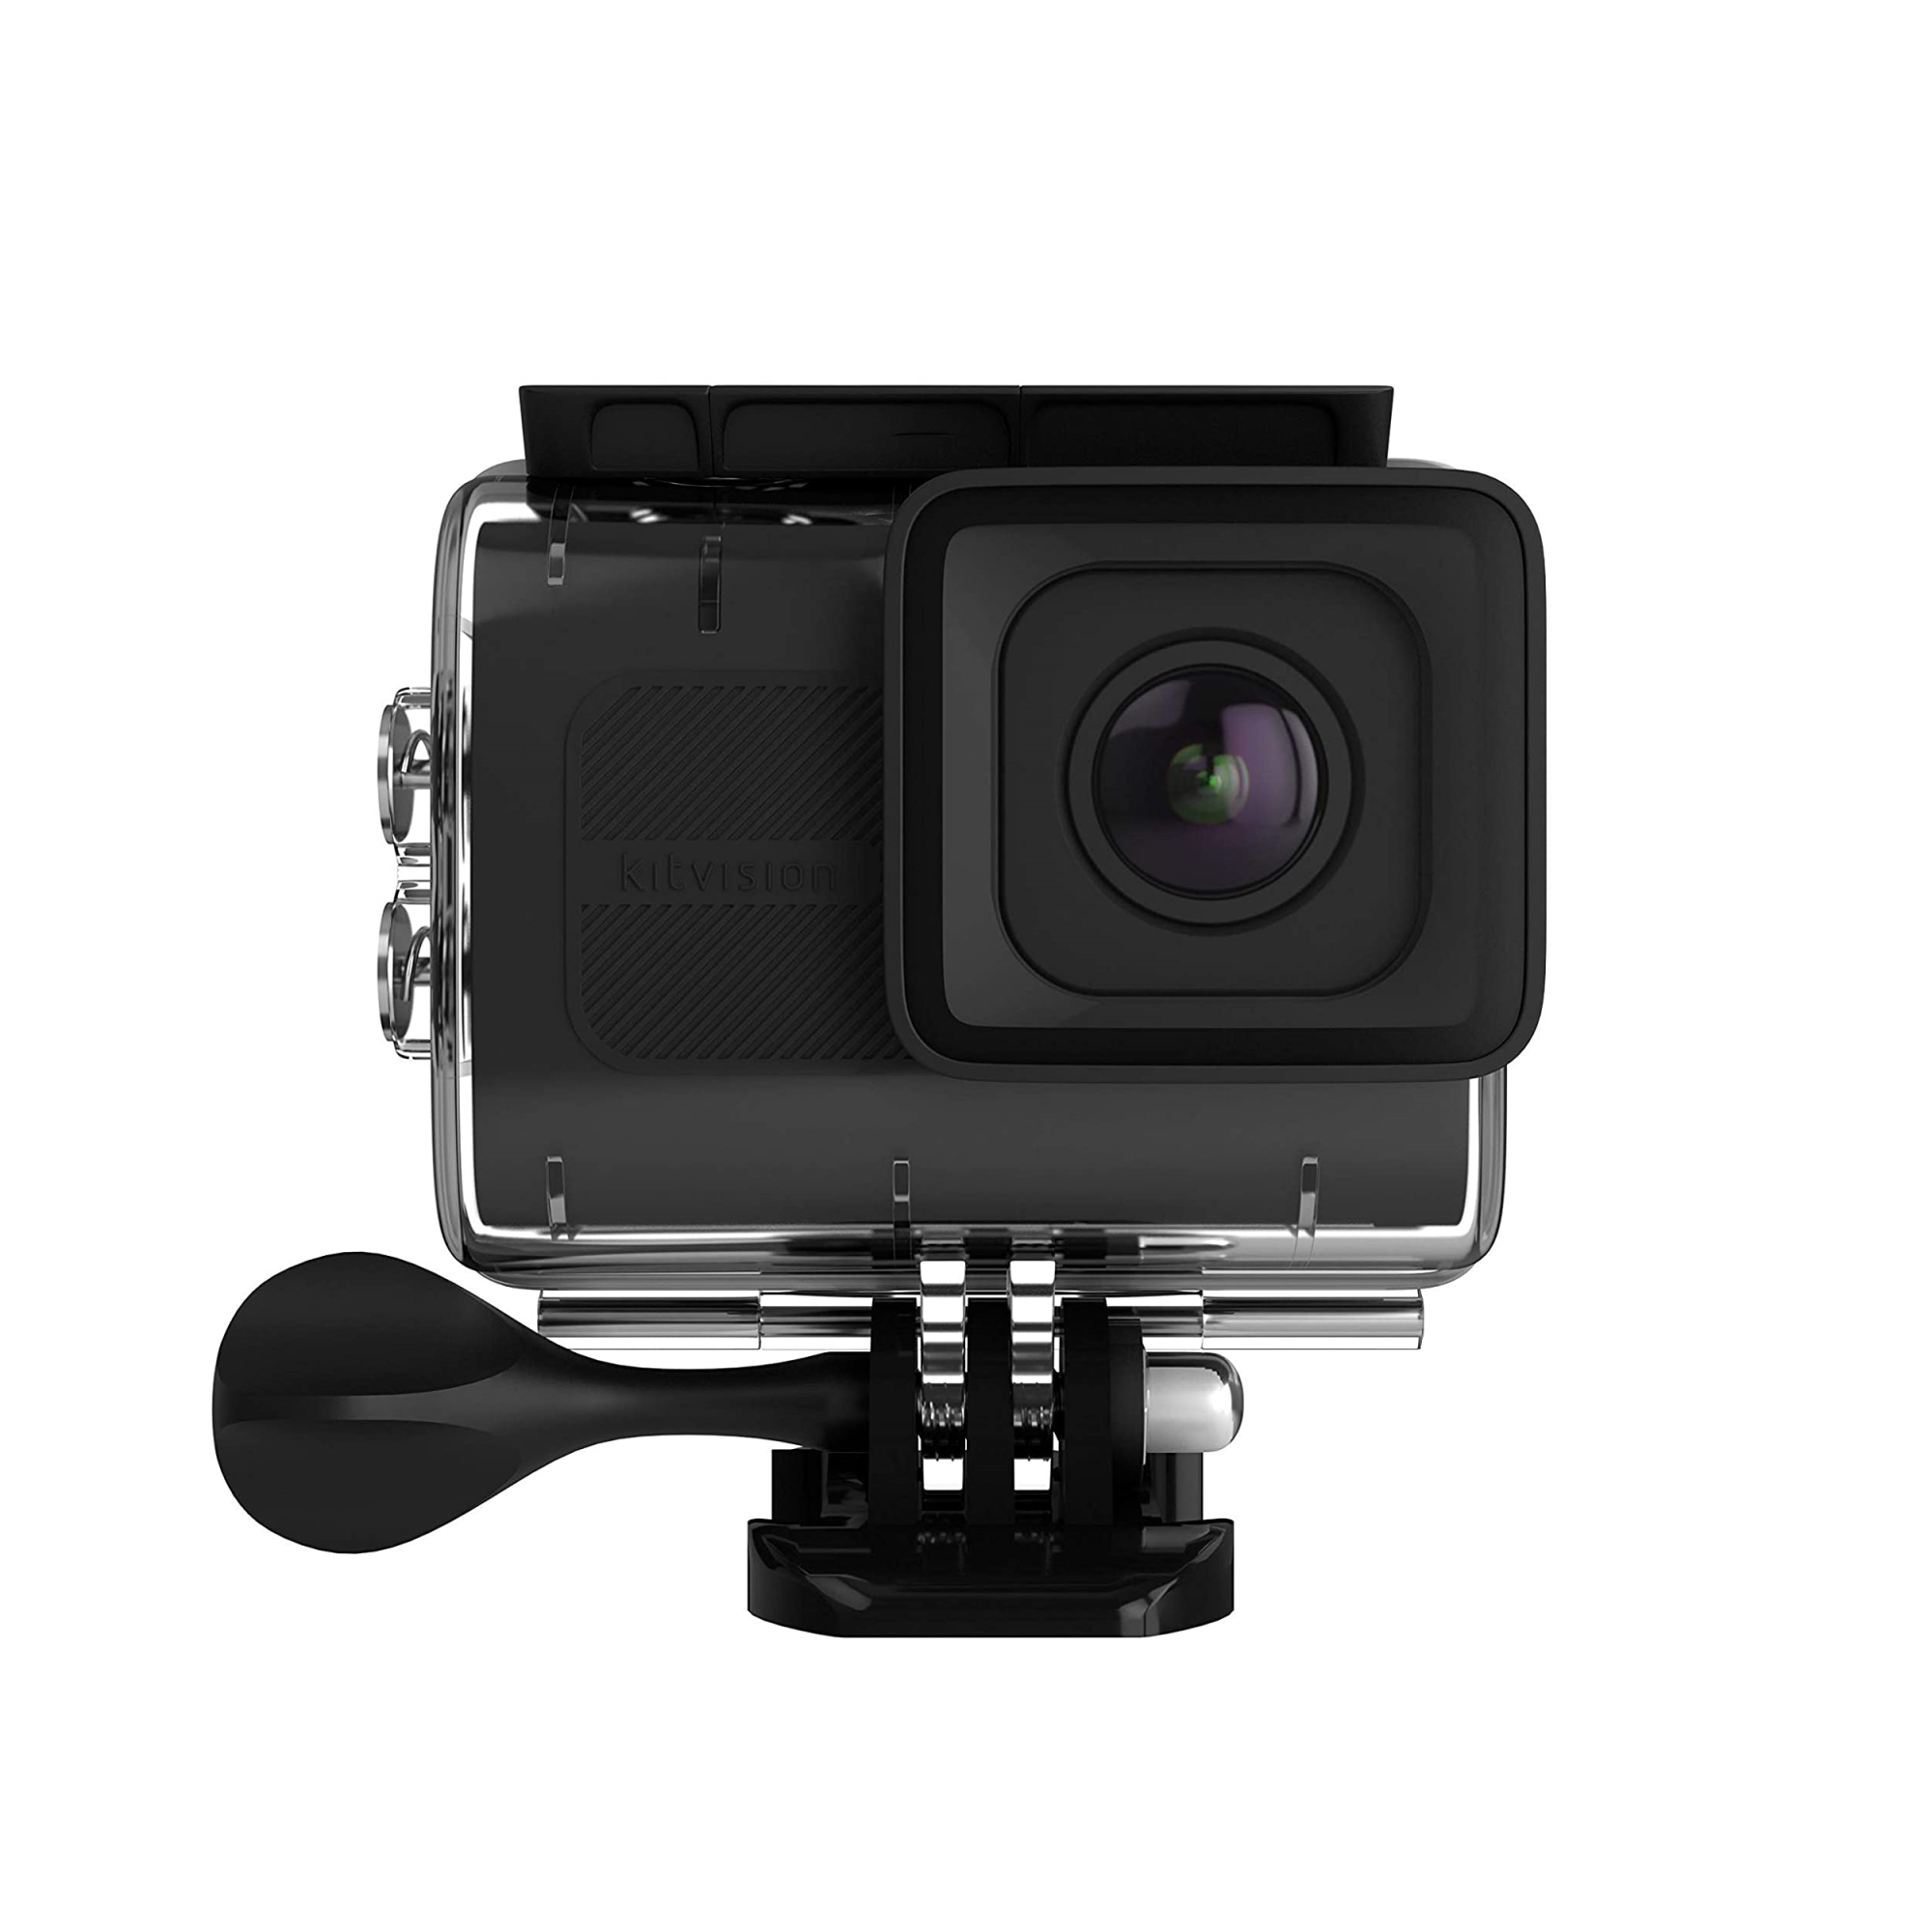 Audio & Hi-Fi Kitvision: Venture 4K Ultra HD Action Camera with WiFi, LCD Display and Waterproof Case - Black NUOVO SIGILLATO SUBITO DISPONIBILE